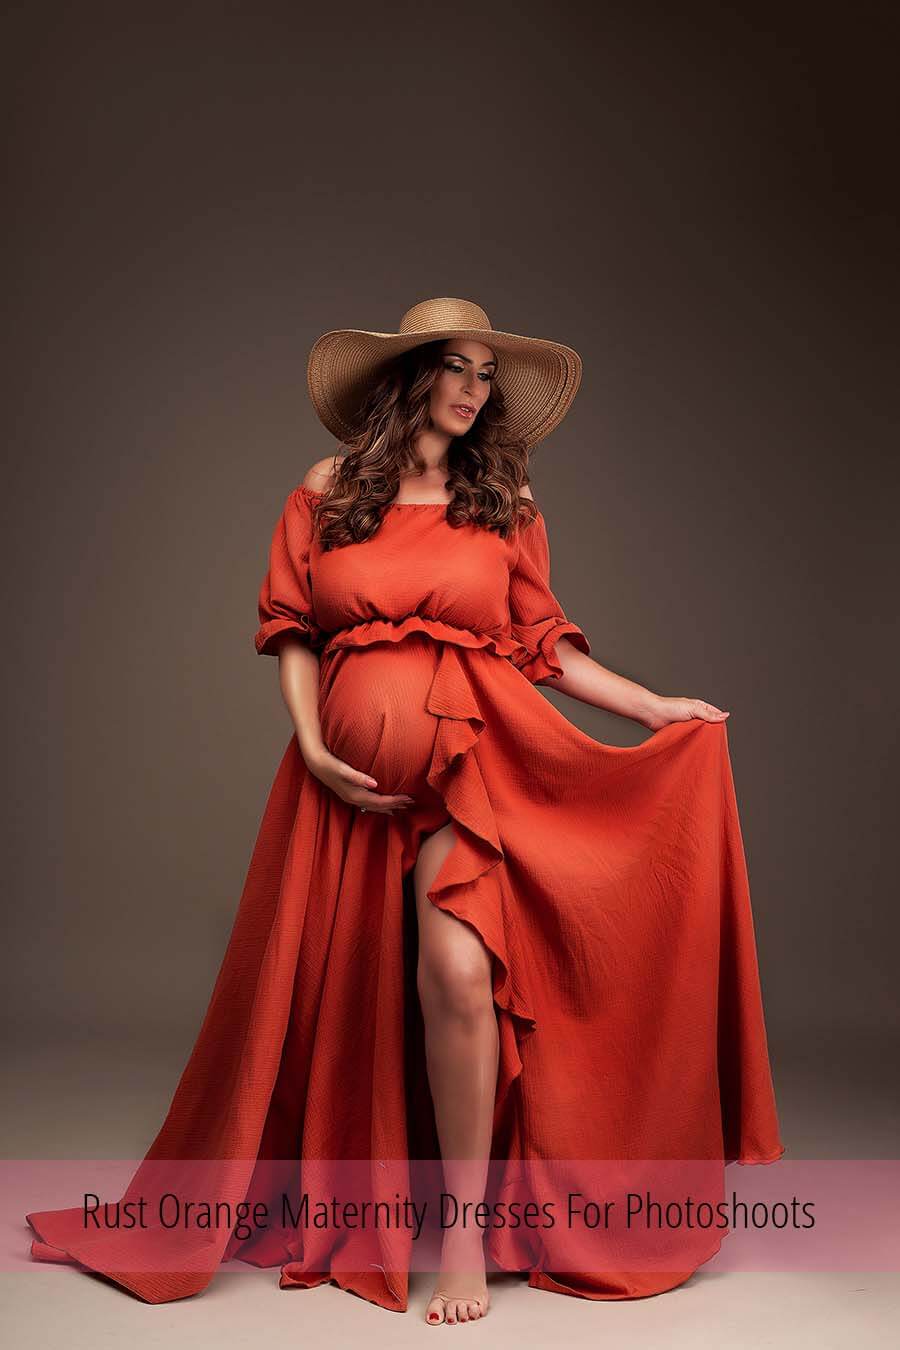 Rust Orange Maternity Dresses For Photoshoots | Mii-Estilo.com